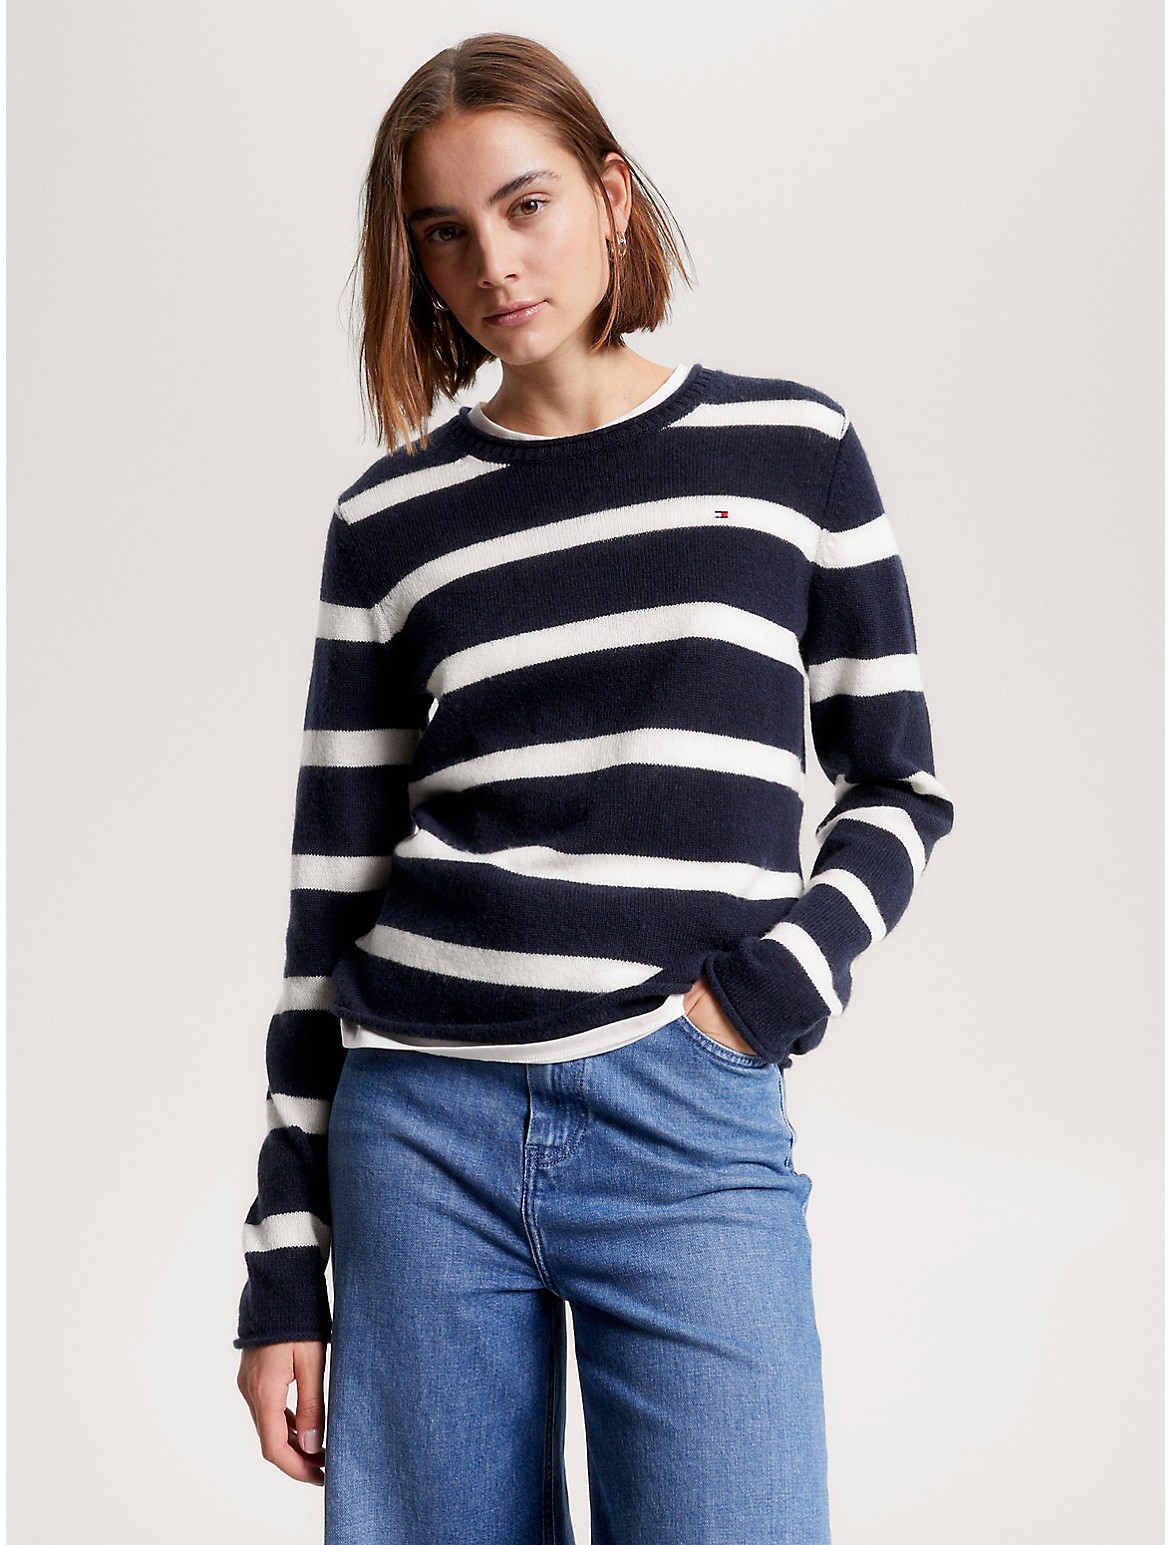 Tommy Hilfiger Women's Wool Crewneck Sweater